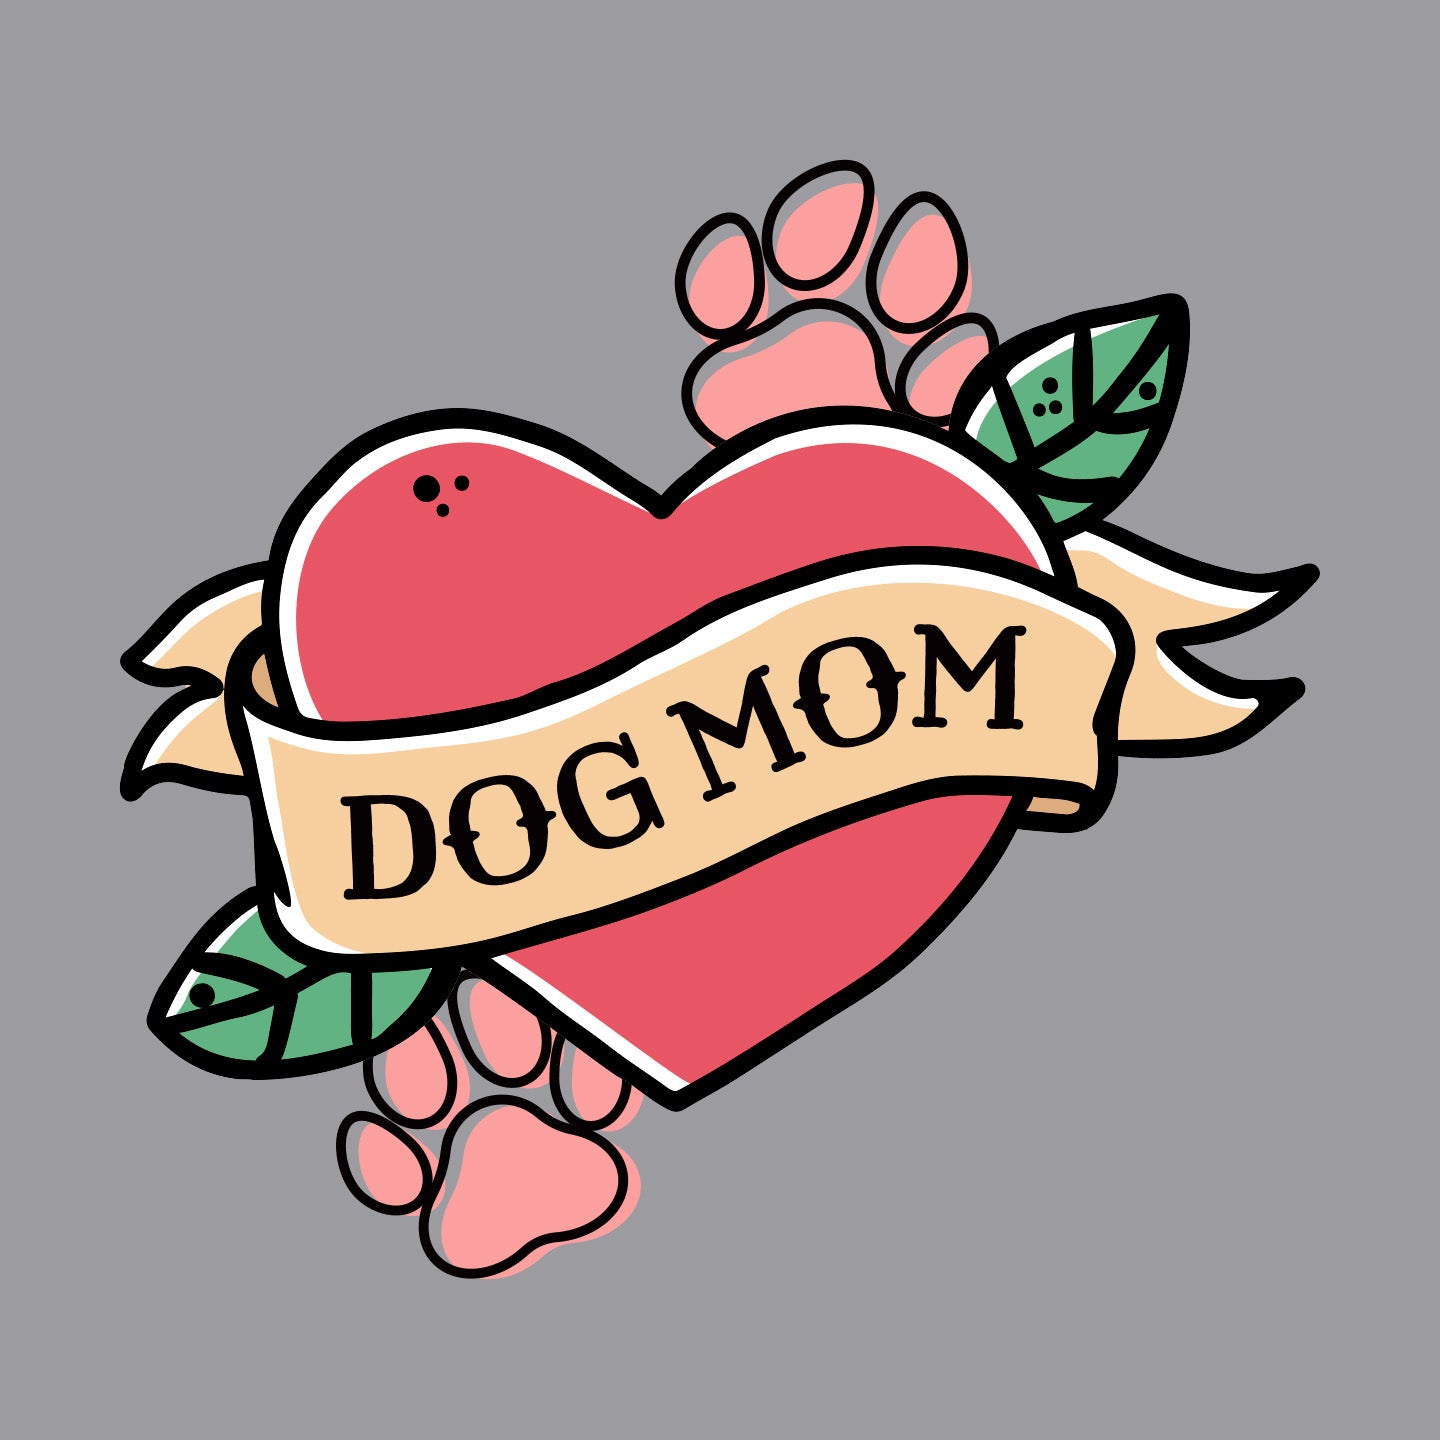 Dog Mom Heart Pocket - Adult Unisex T-Shirt